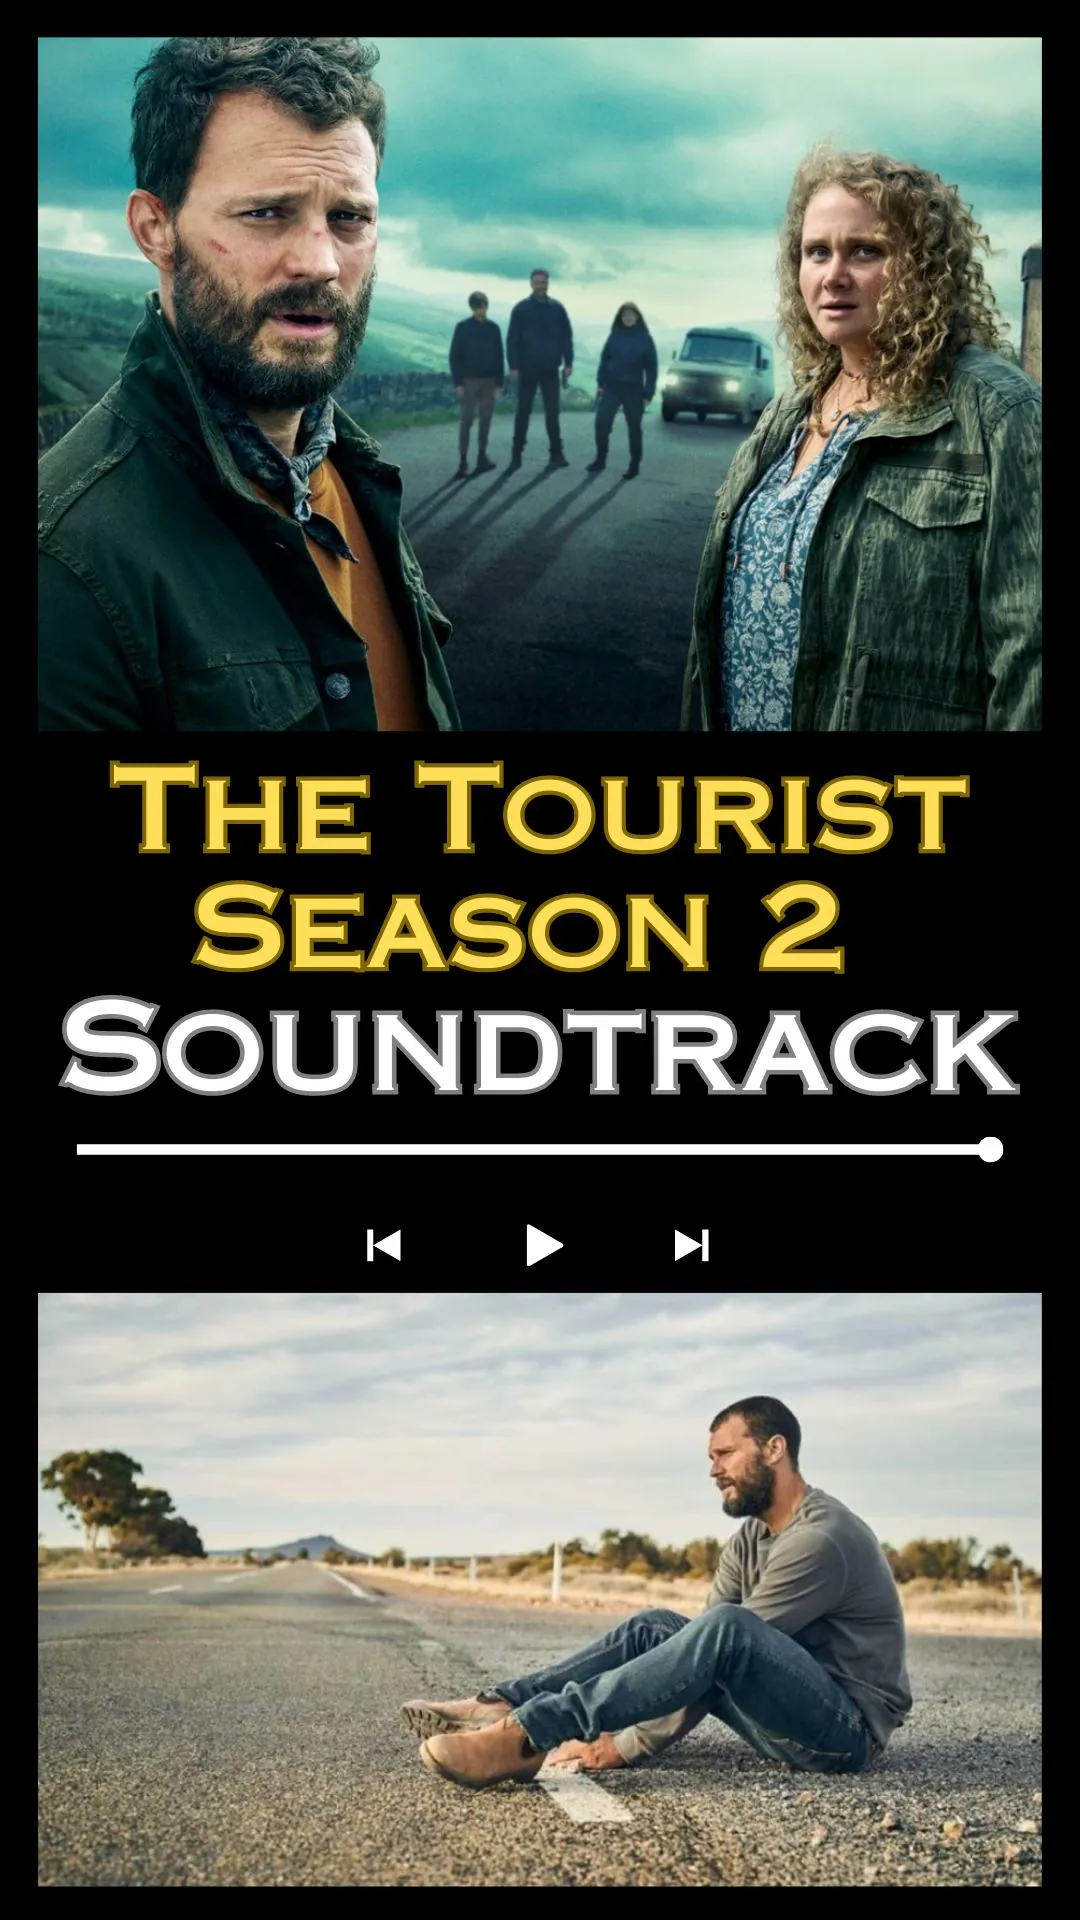 The Tourist Season 2 Soundtrack